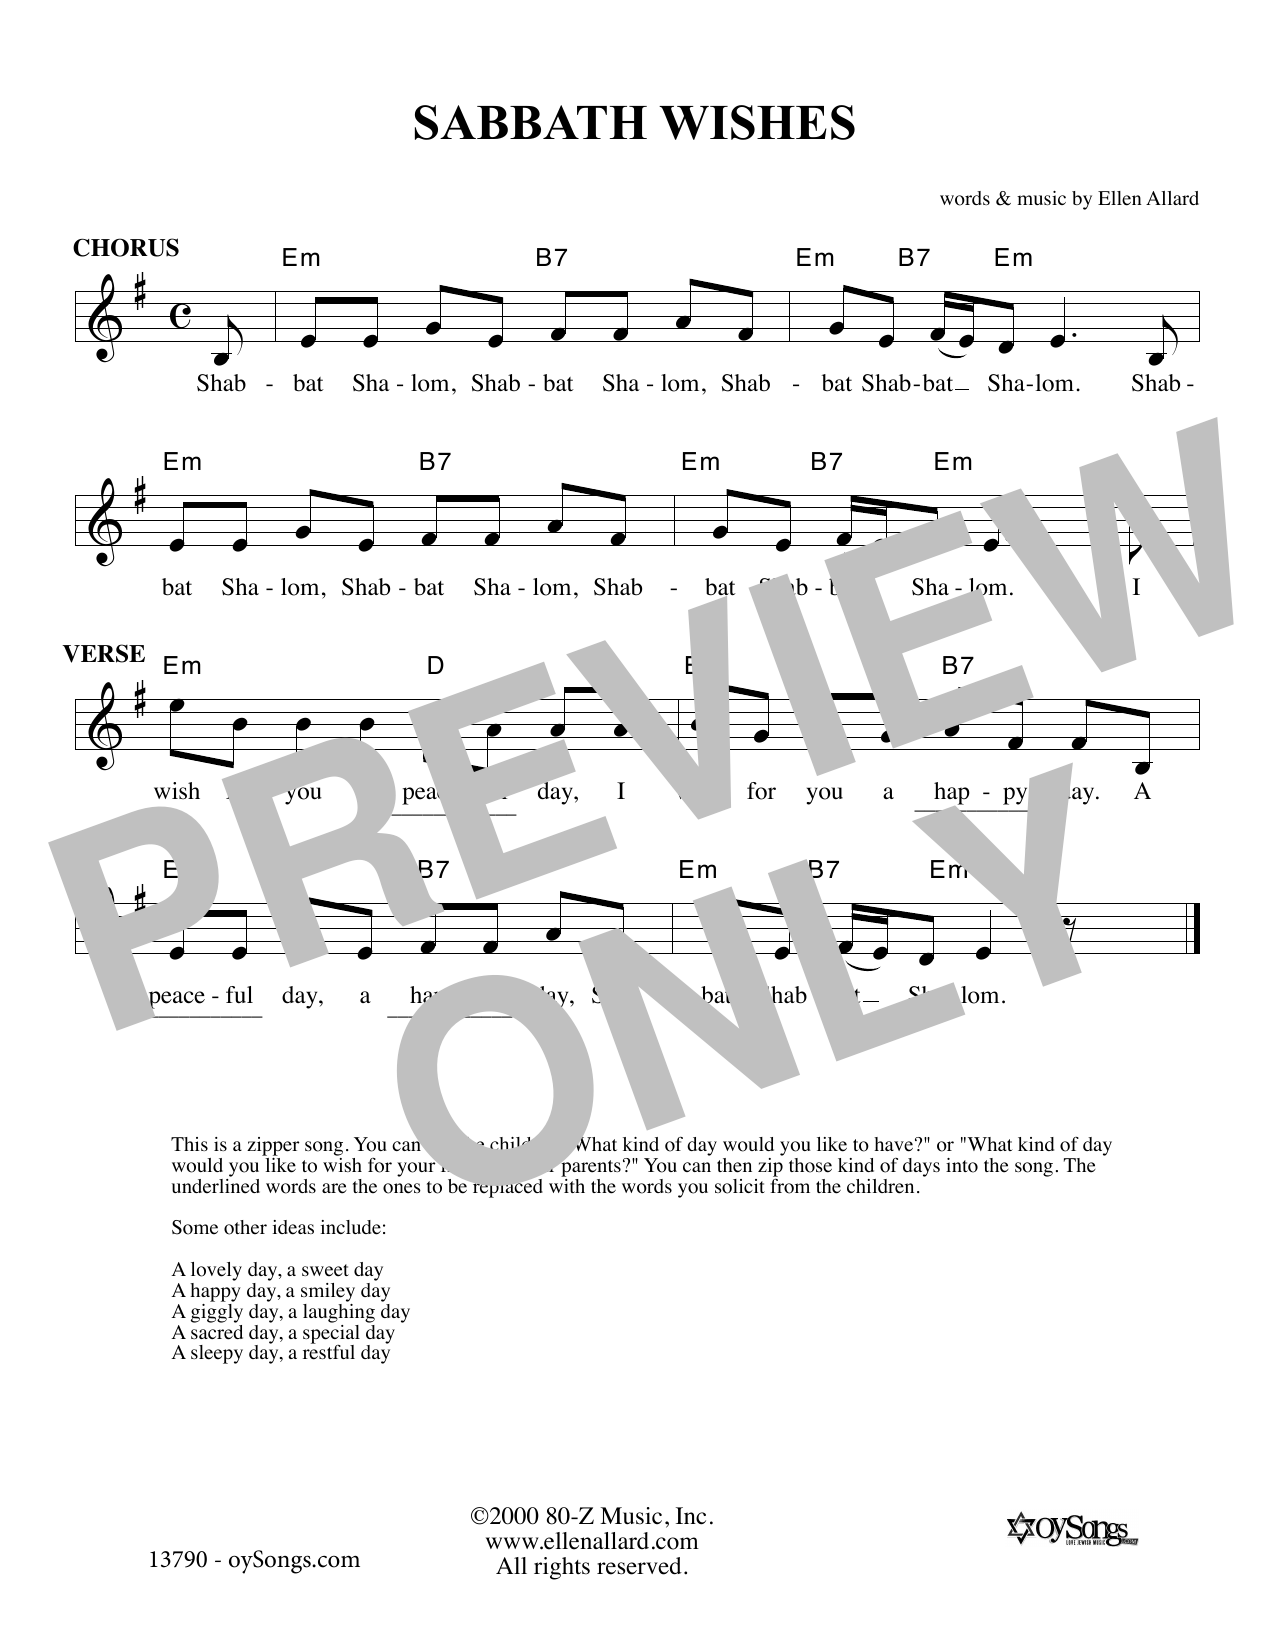 Ellen Allard Sabbath Wishes Sheet Music Notes & Chords for Melody Line, Lyrics & Chords - Download or Print PDF